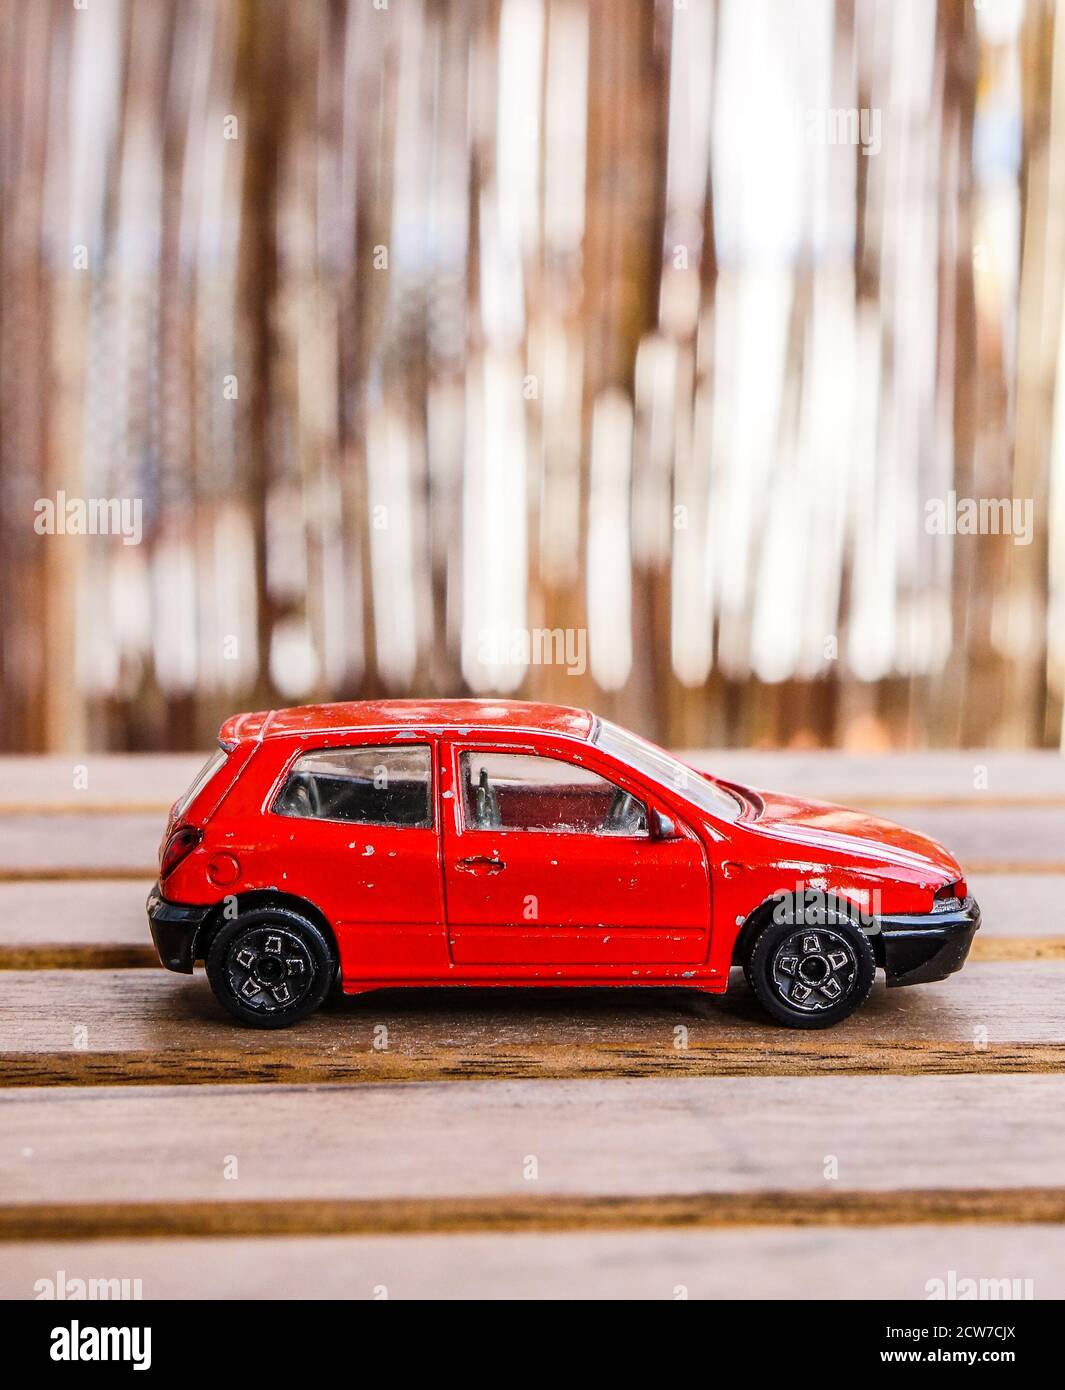 POZNAN, POLAND - Oct 26, 2016: Red Bburago Fiat Bravo toy car on a table  Stock Photo - Alamy